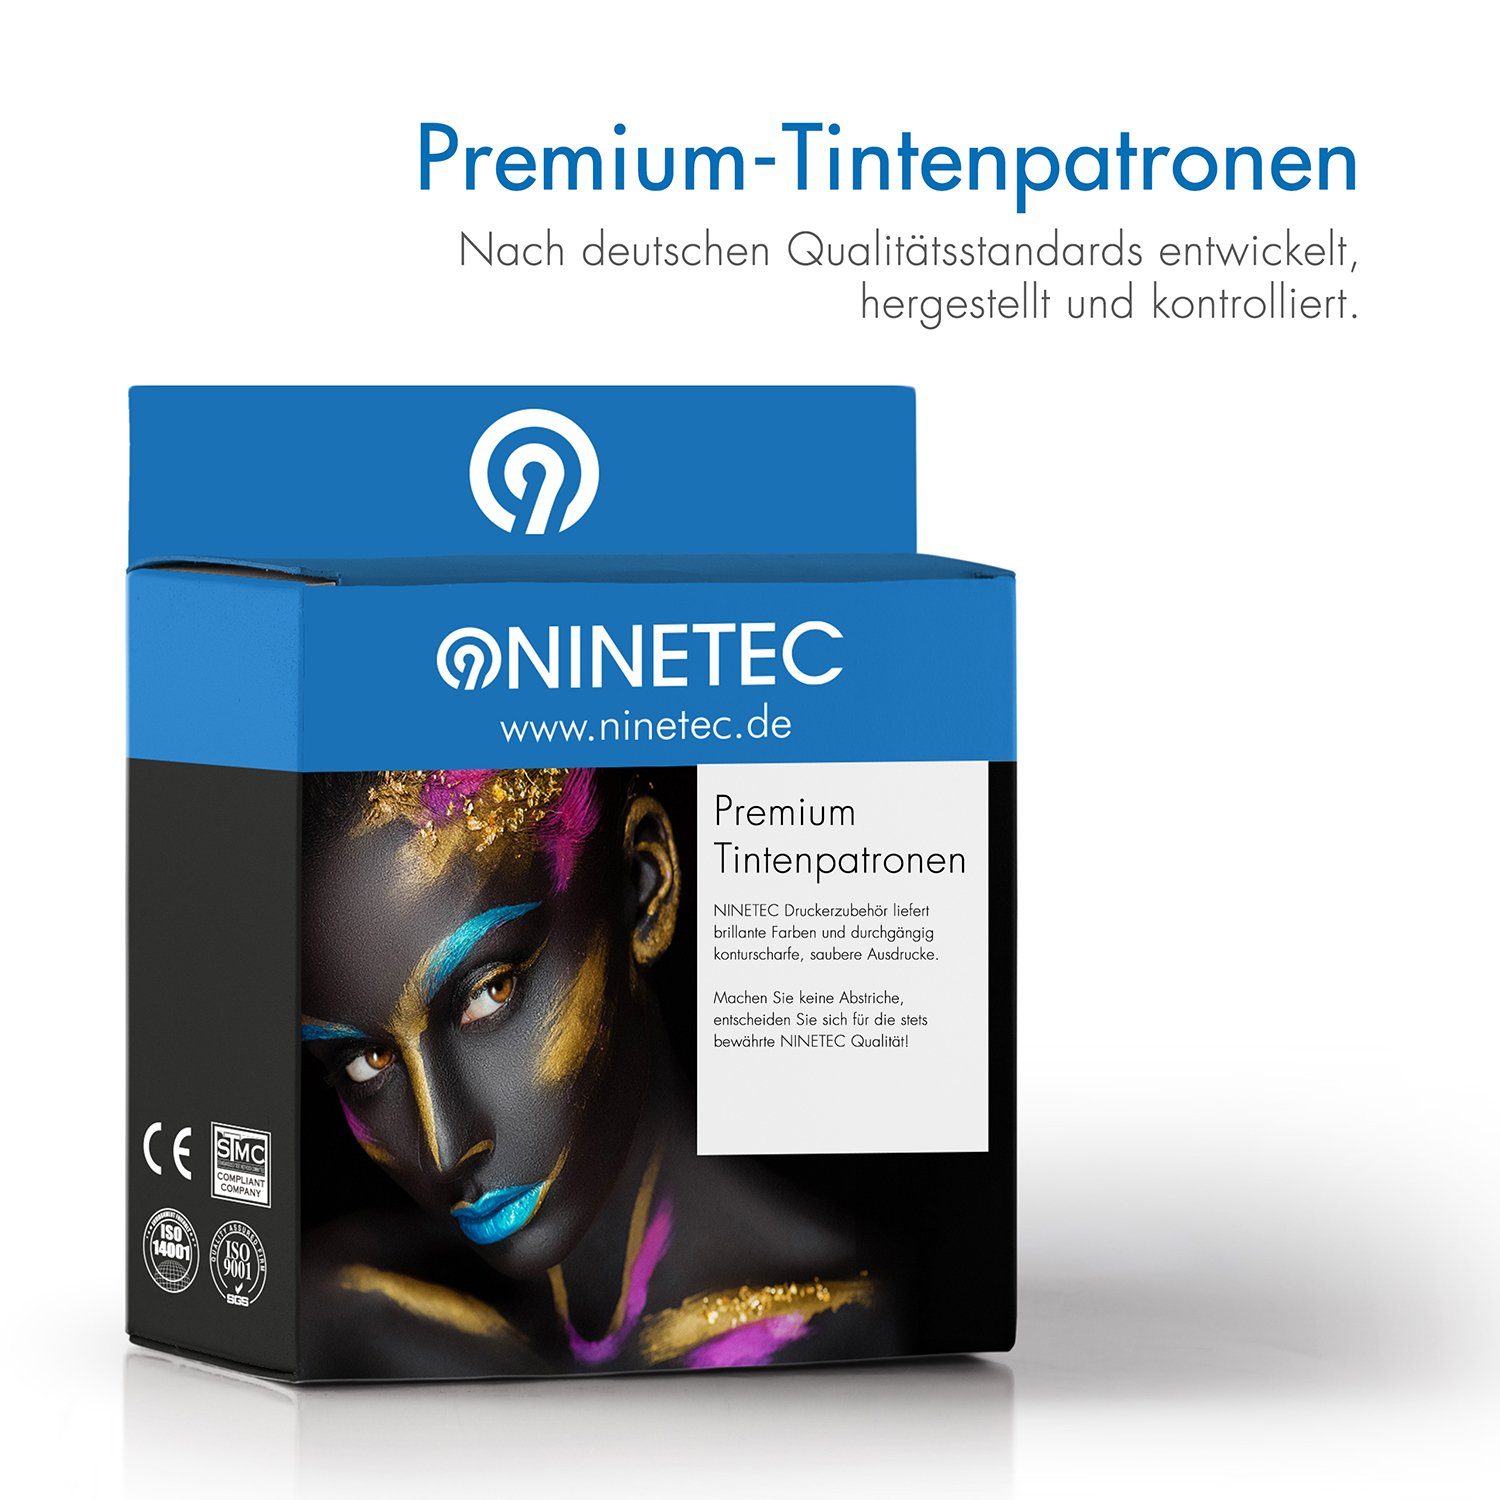 Tintenpatrone XL 953 Black HP ersetzt NINETEC 953XL